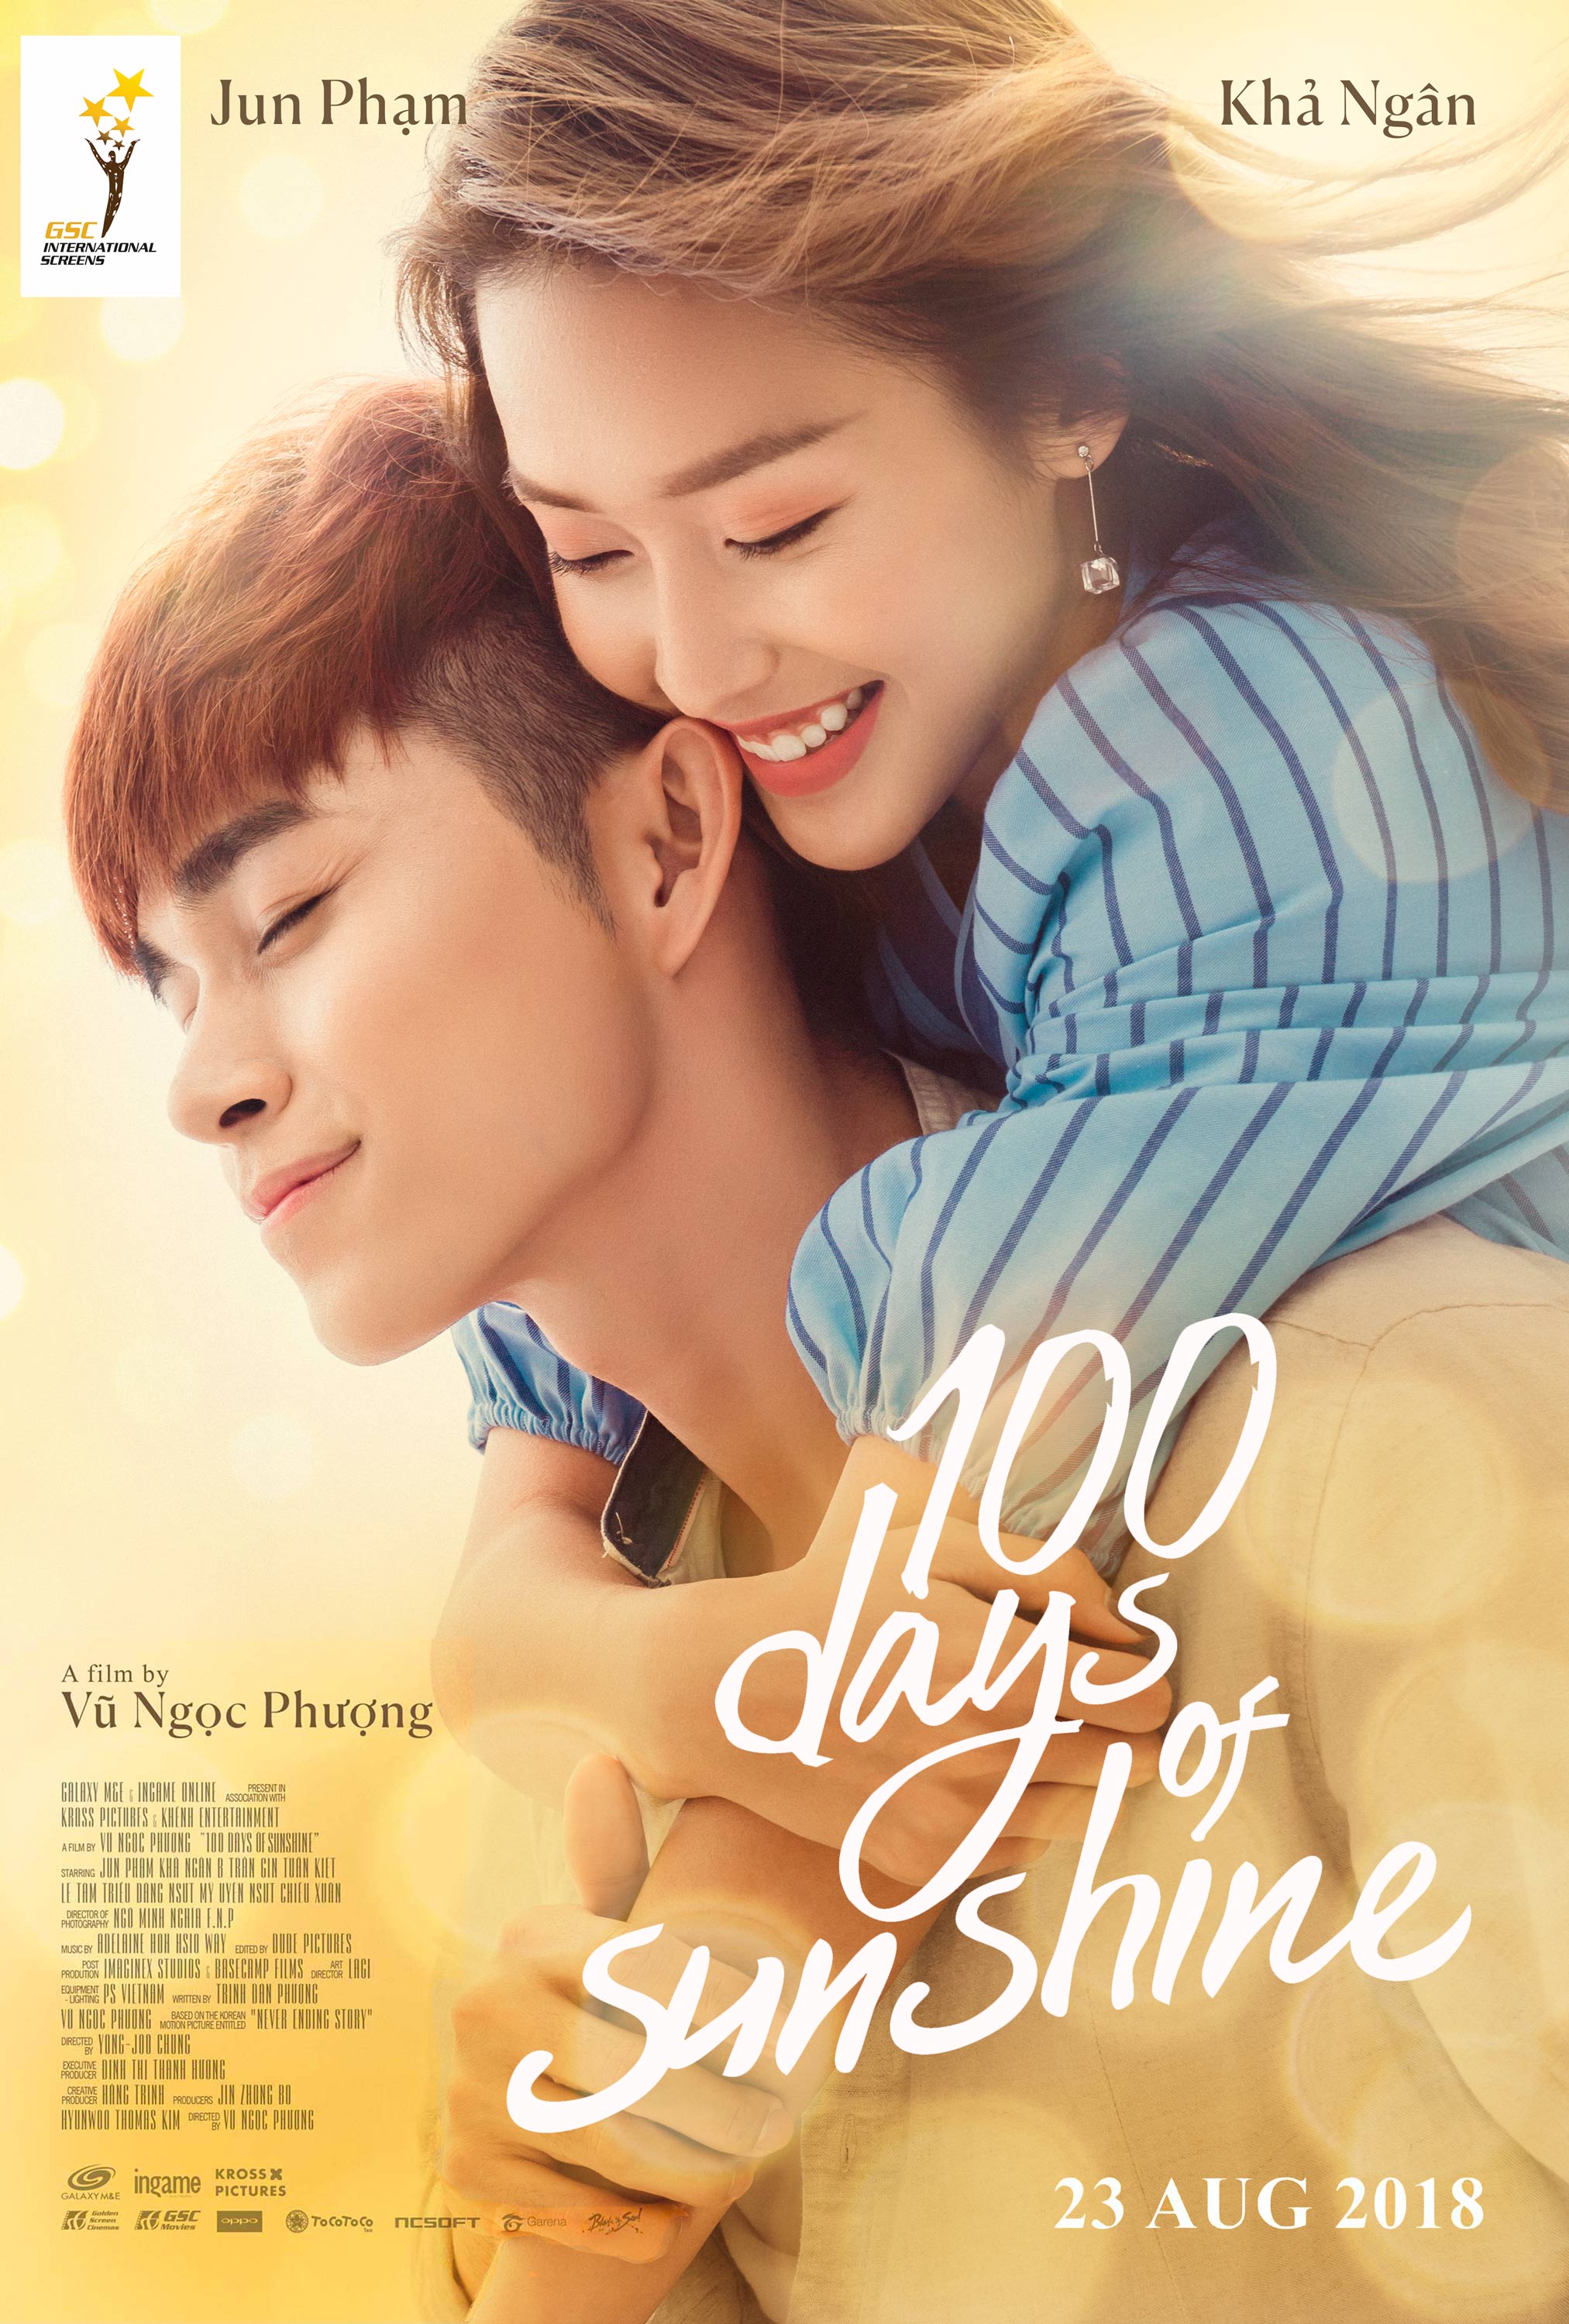 Festival Filem Vietnam - 100 Days of Sunshine